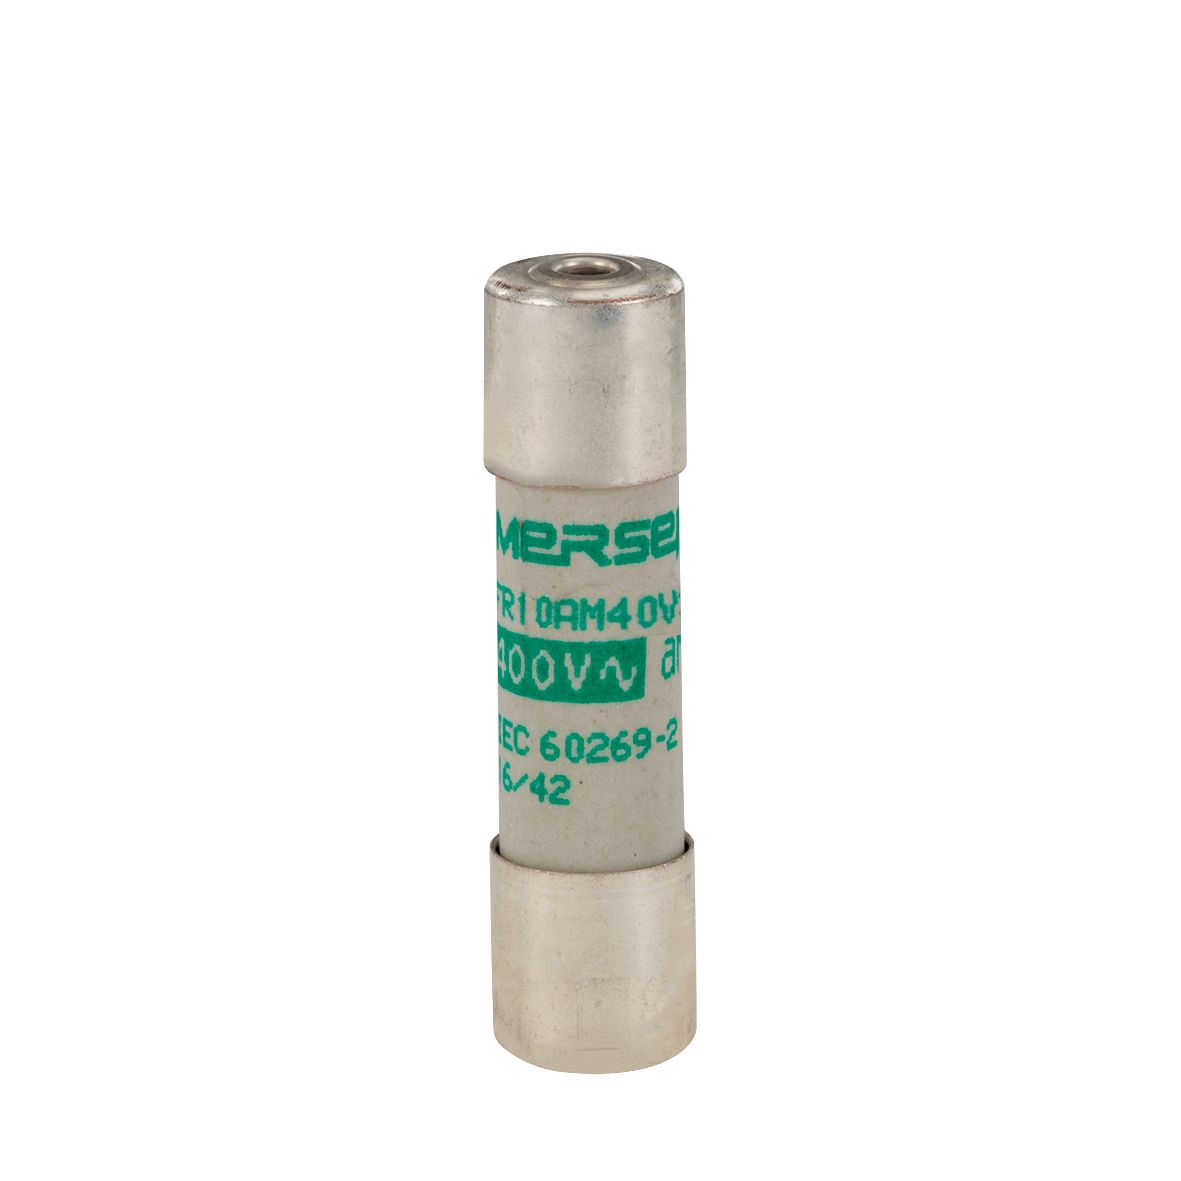 B084986 - Cylindrical fuse-link aM 400VAC 10.3x38, 10A with striker